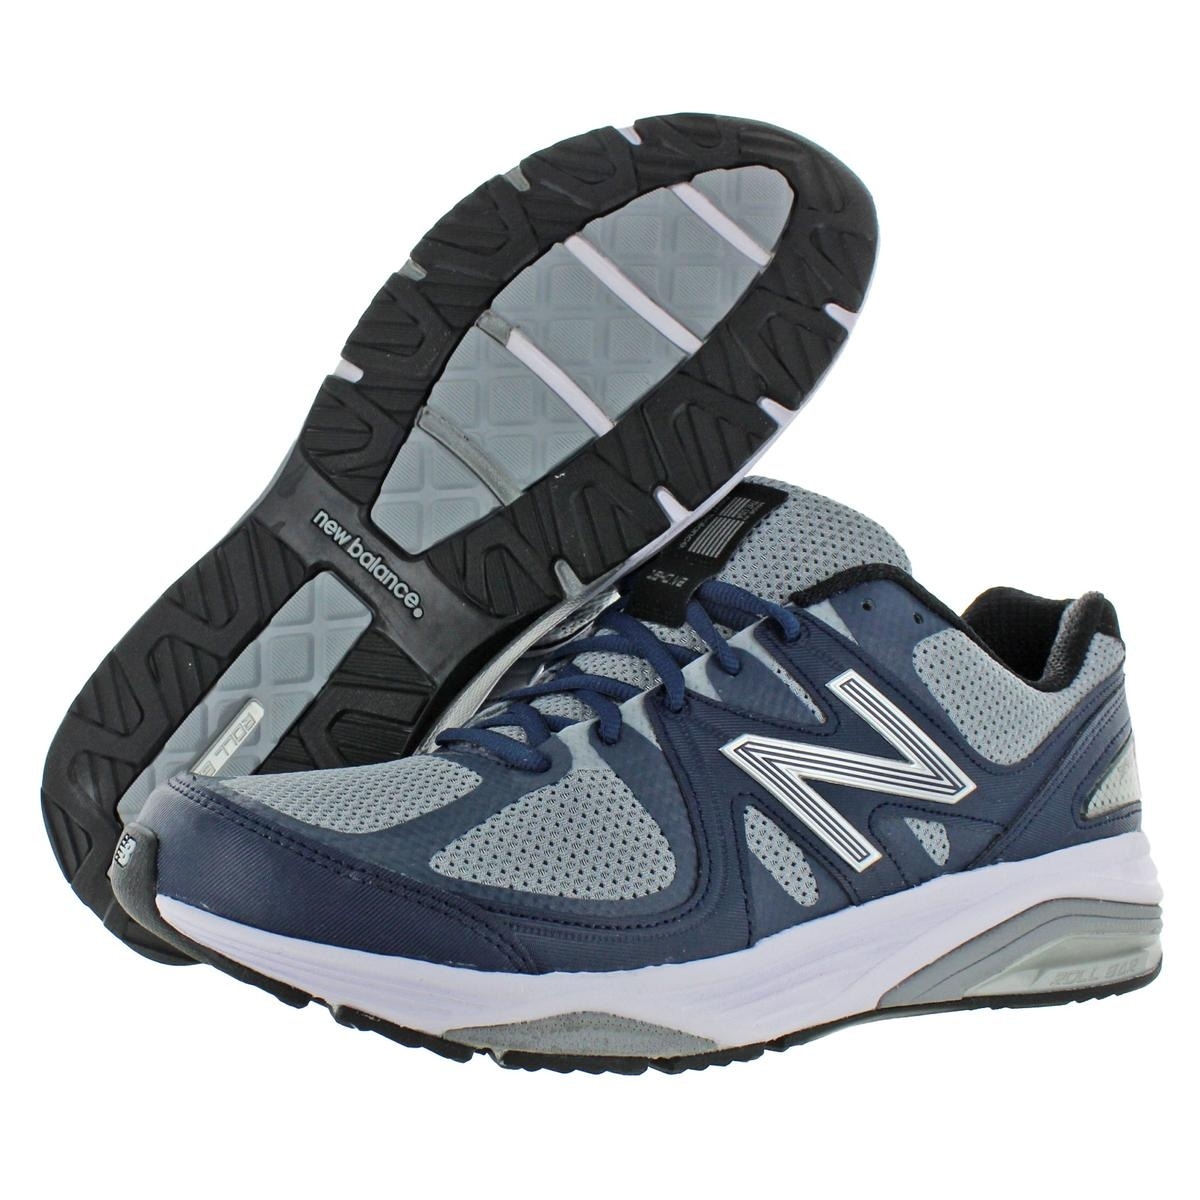 new balance 1540v2 men's athletic shoes